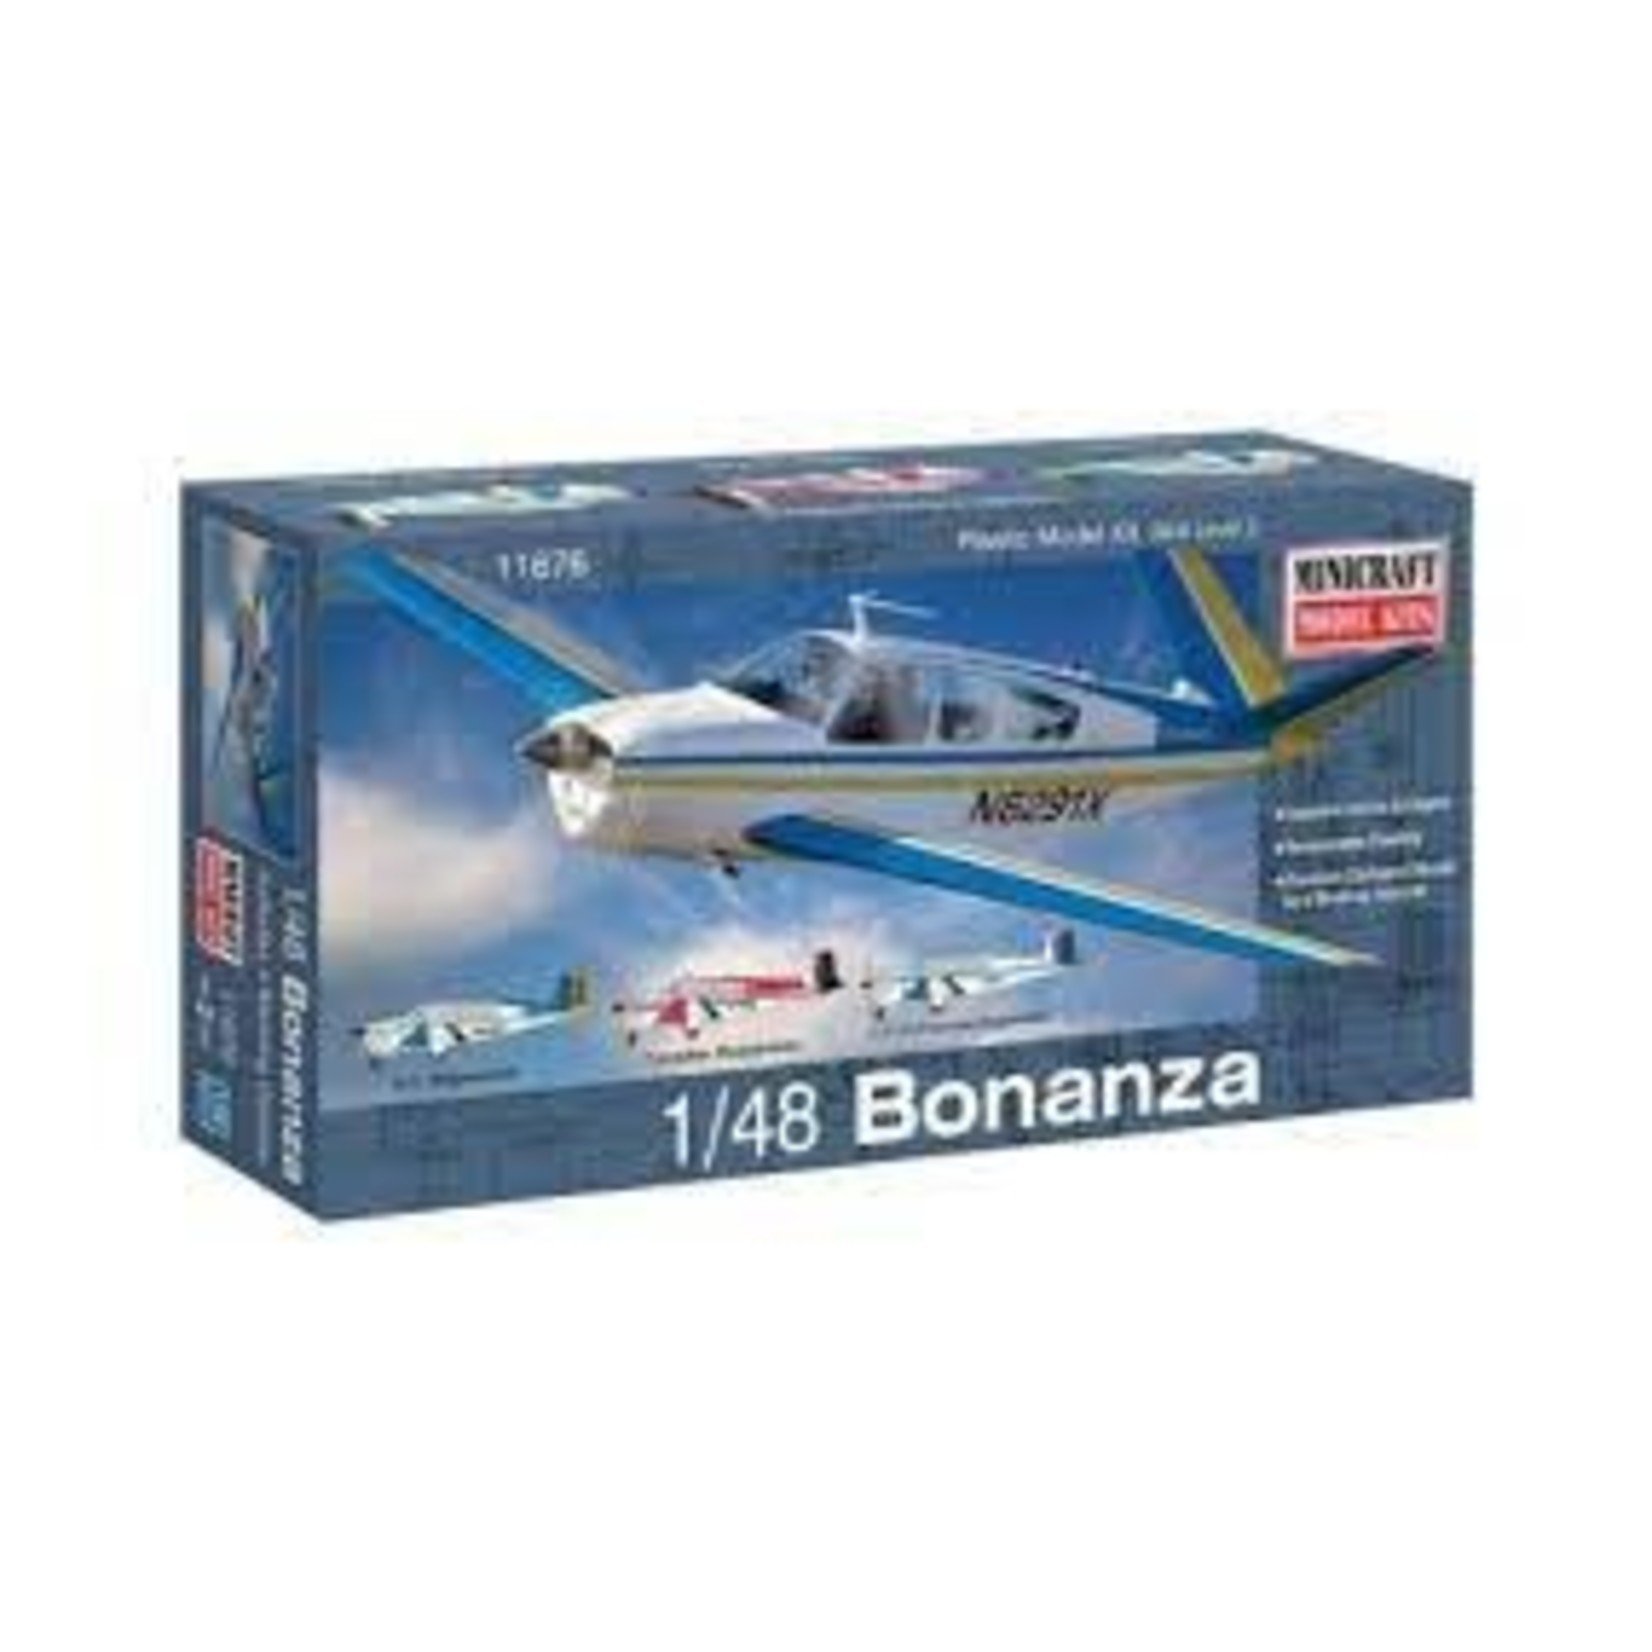 Minicraft Models 1/48 Beechcraft Bonanza F33 Aircraft